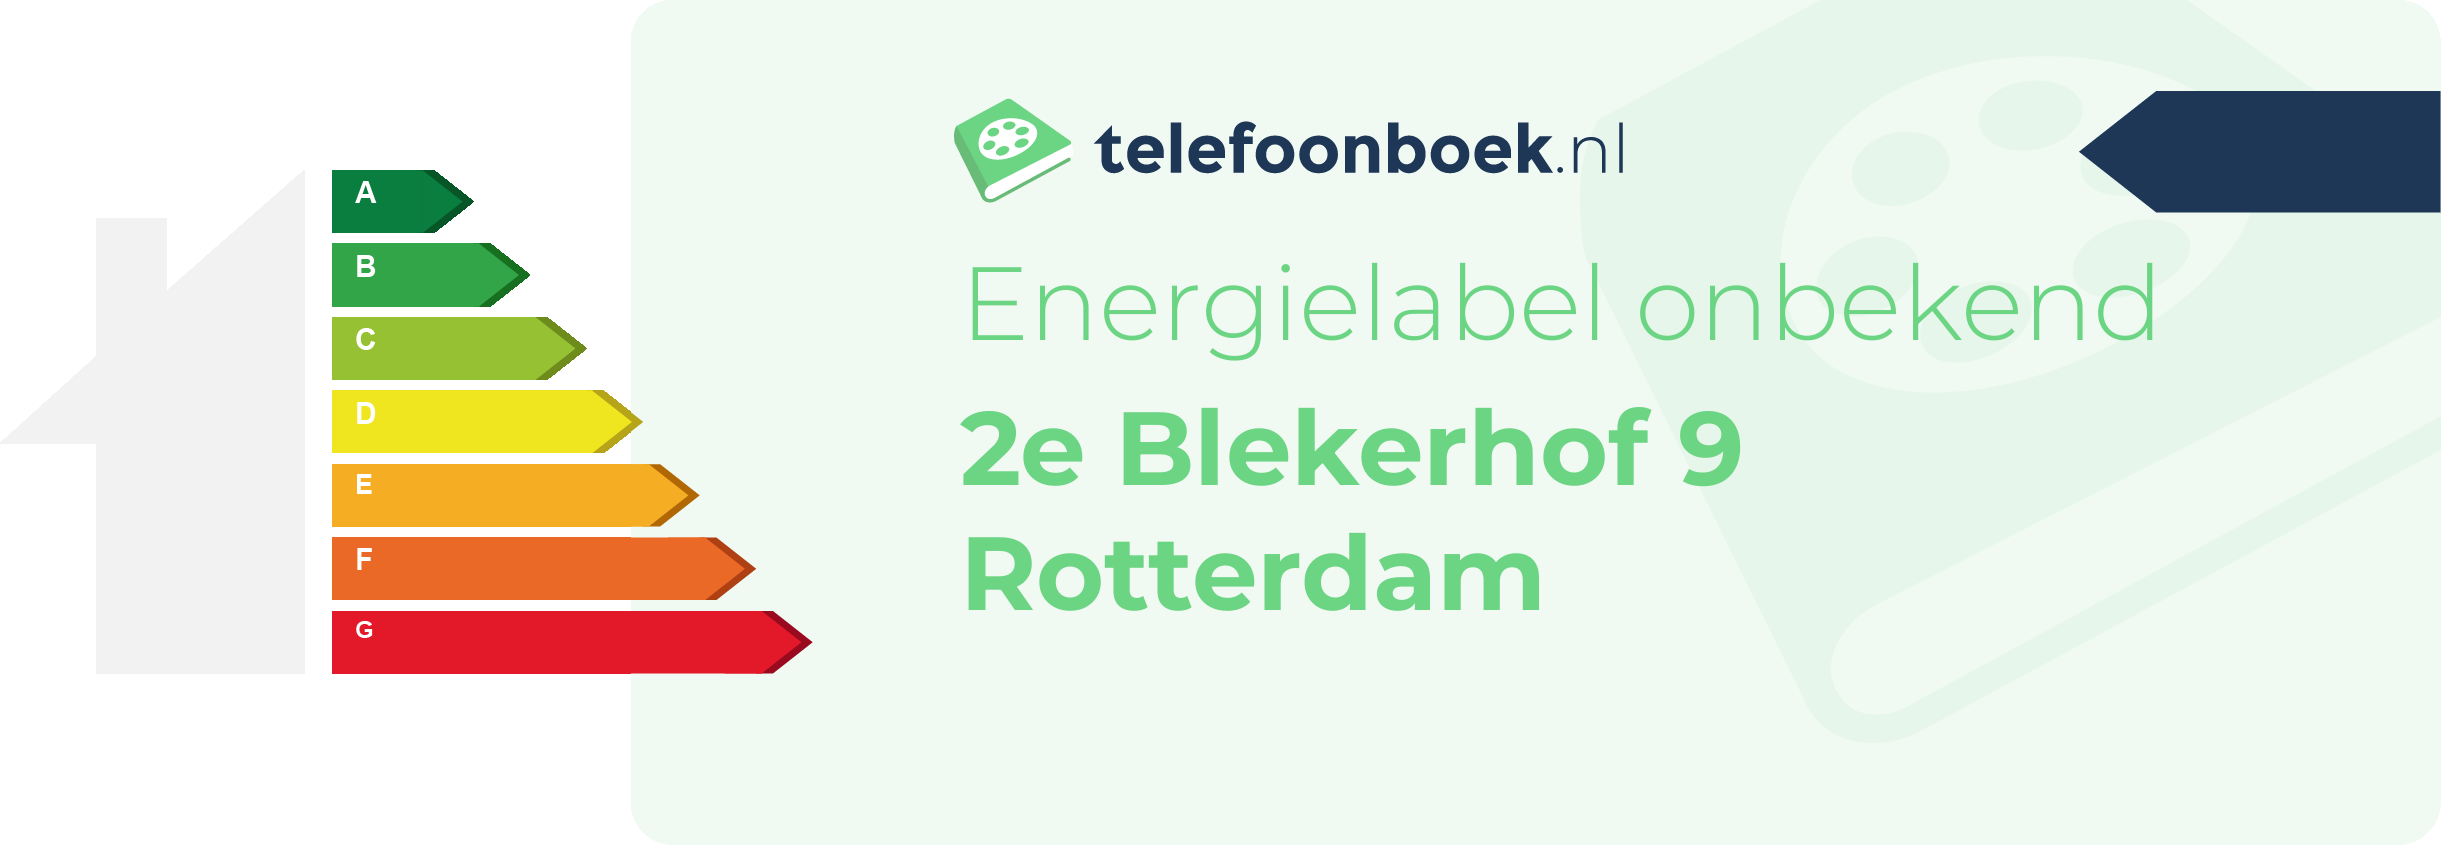 Energielabel 2e Blekerhof 9 Rotterdam